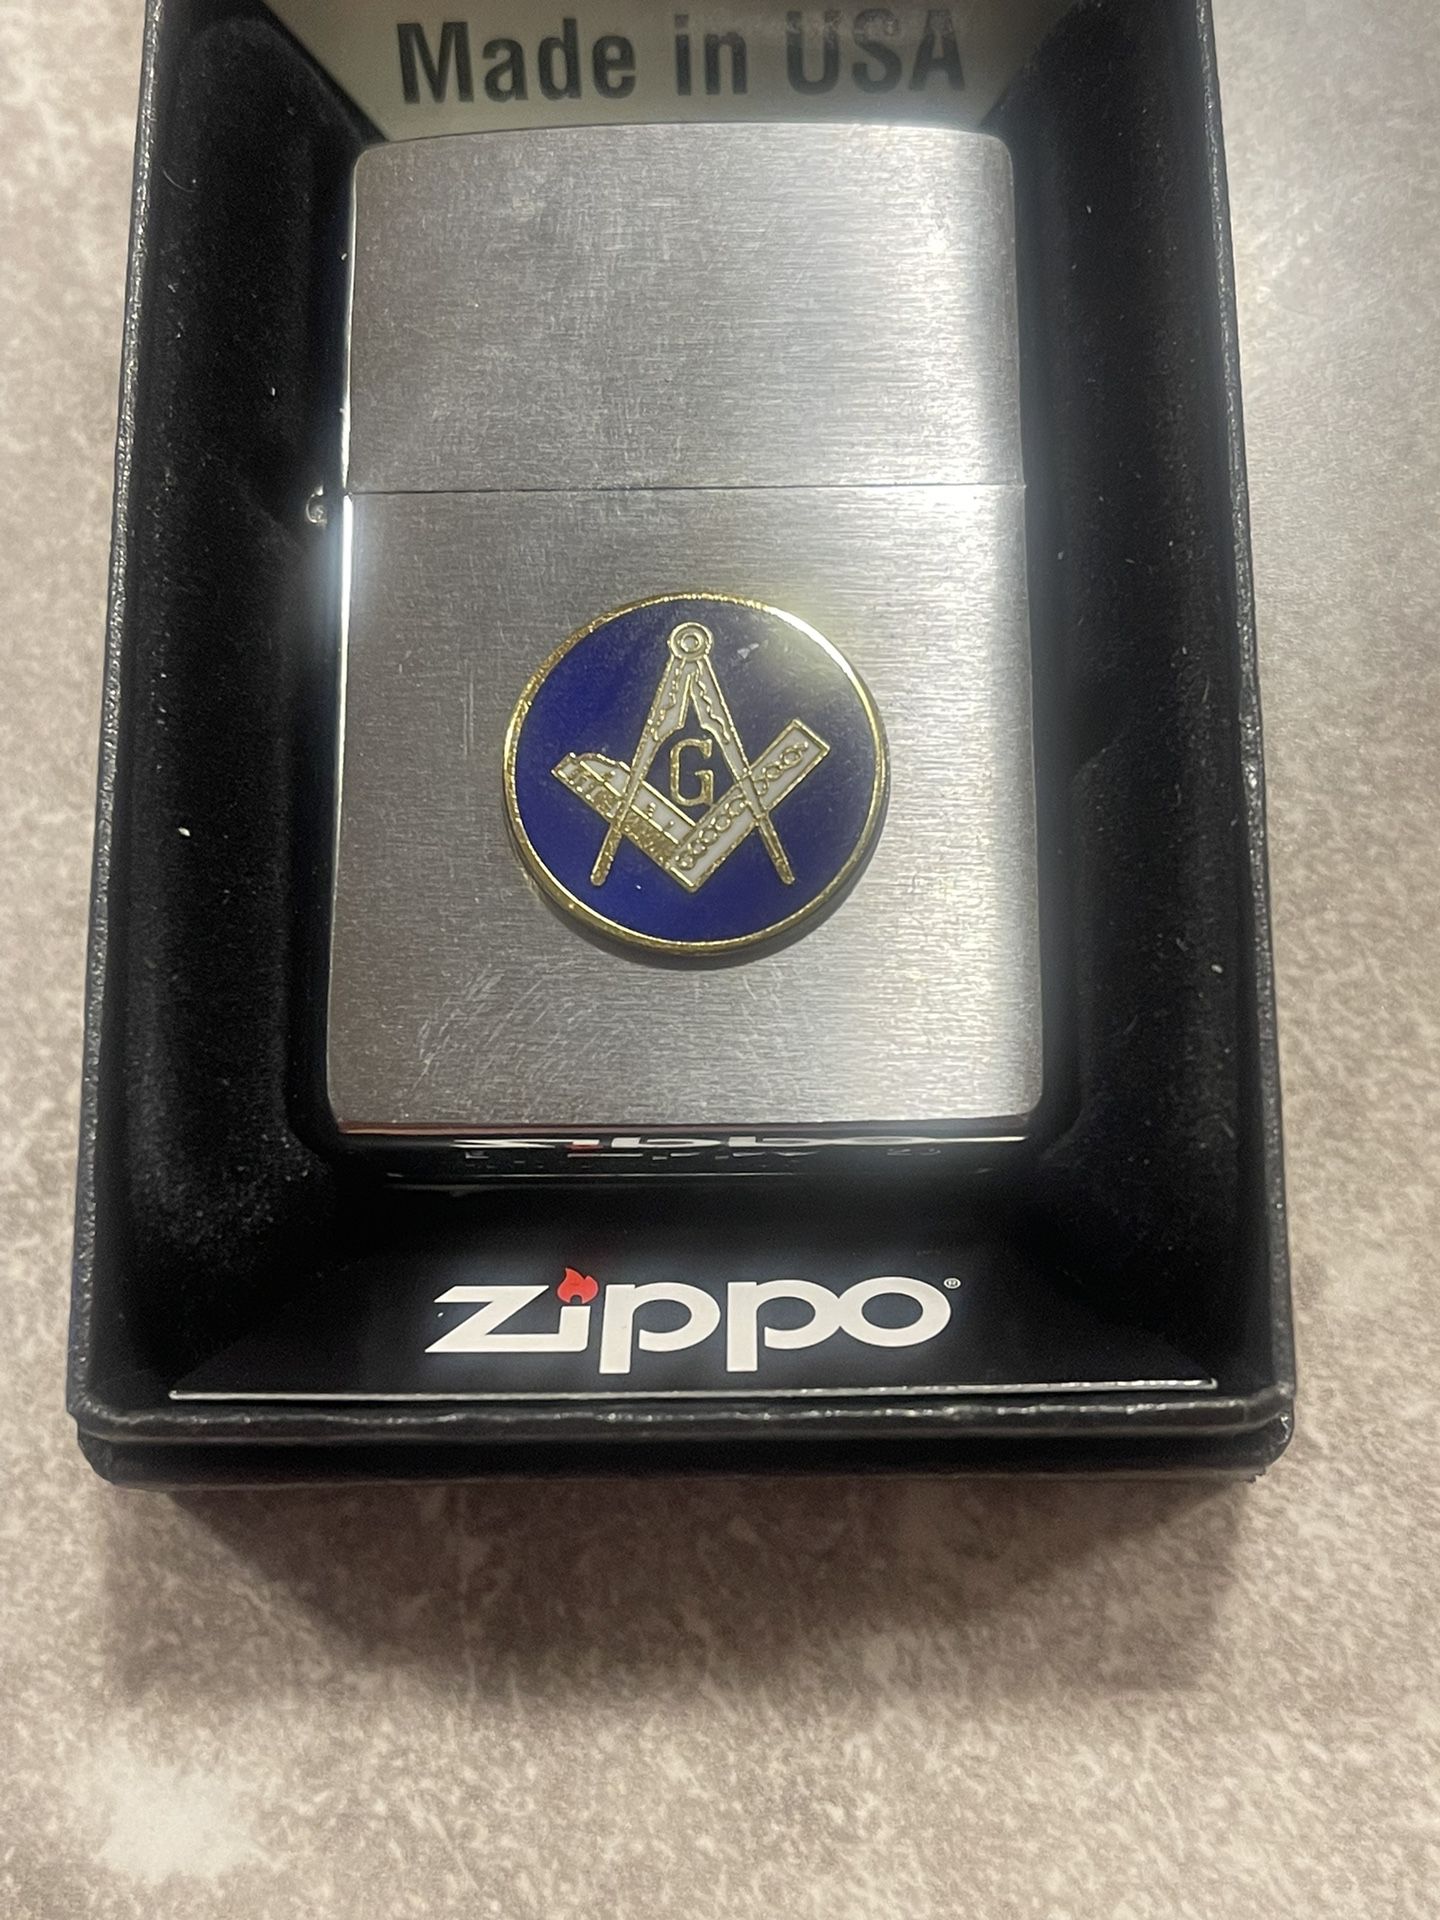 Zippo Lighter Mason 